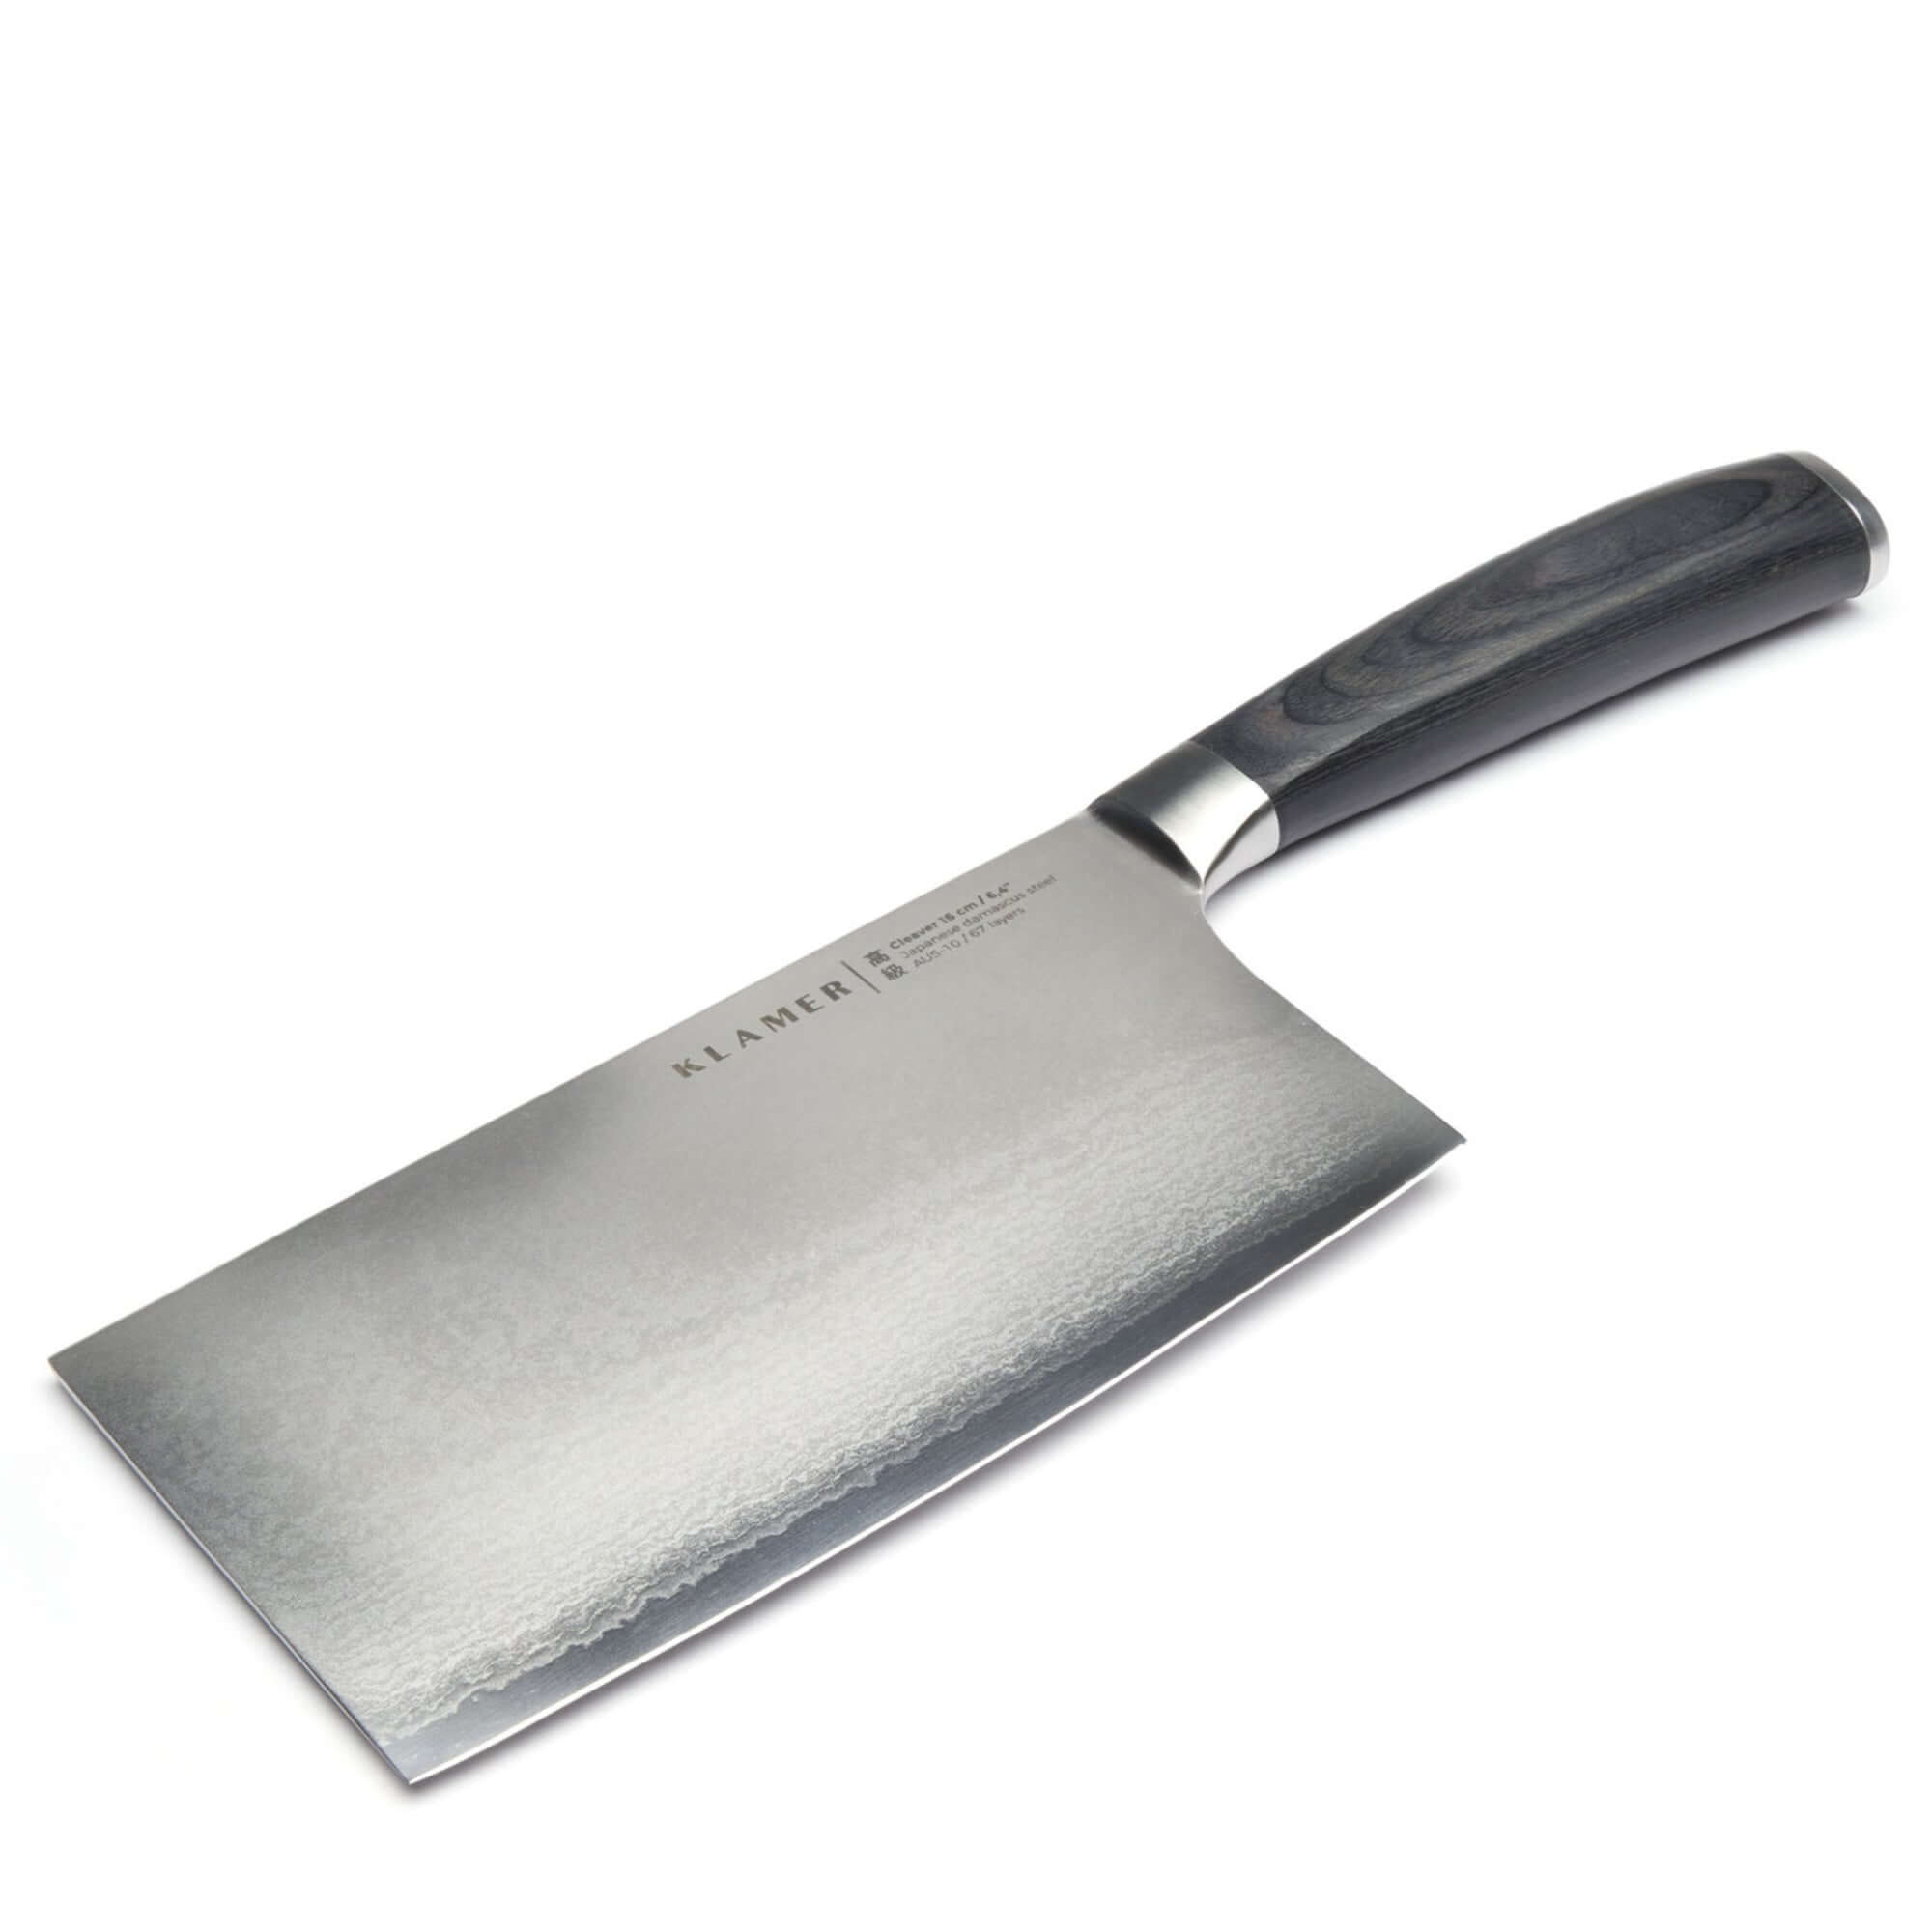 KLAMER Damast Hackmesser Messer 16cm